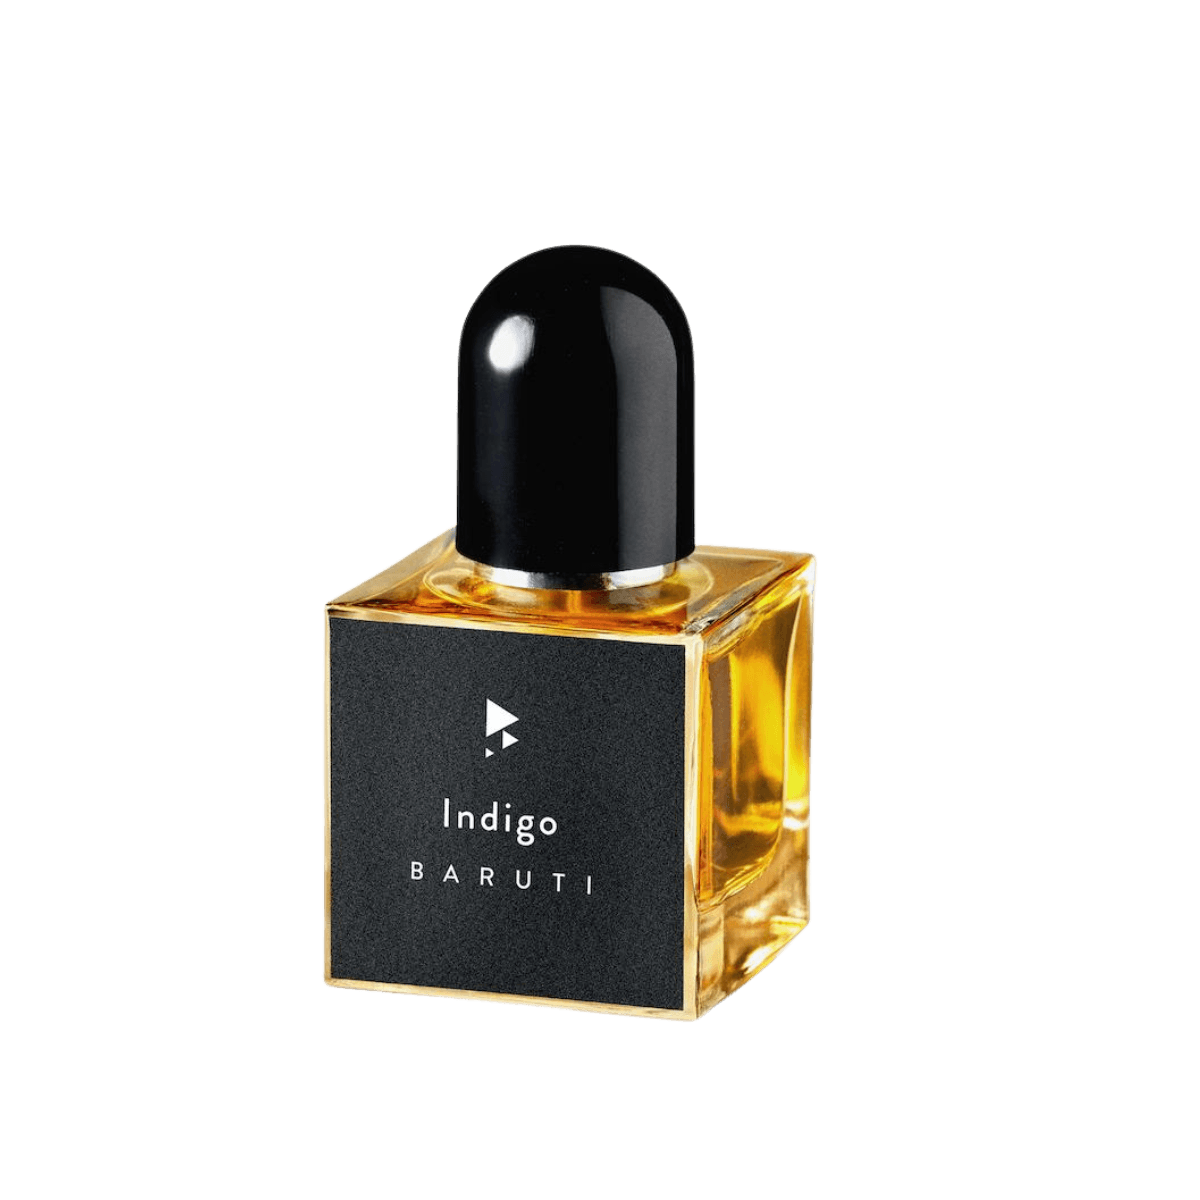 Image of the perfume Indigo by the brand Baruti